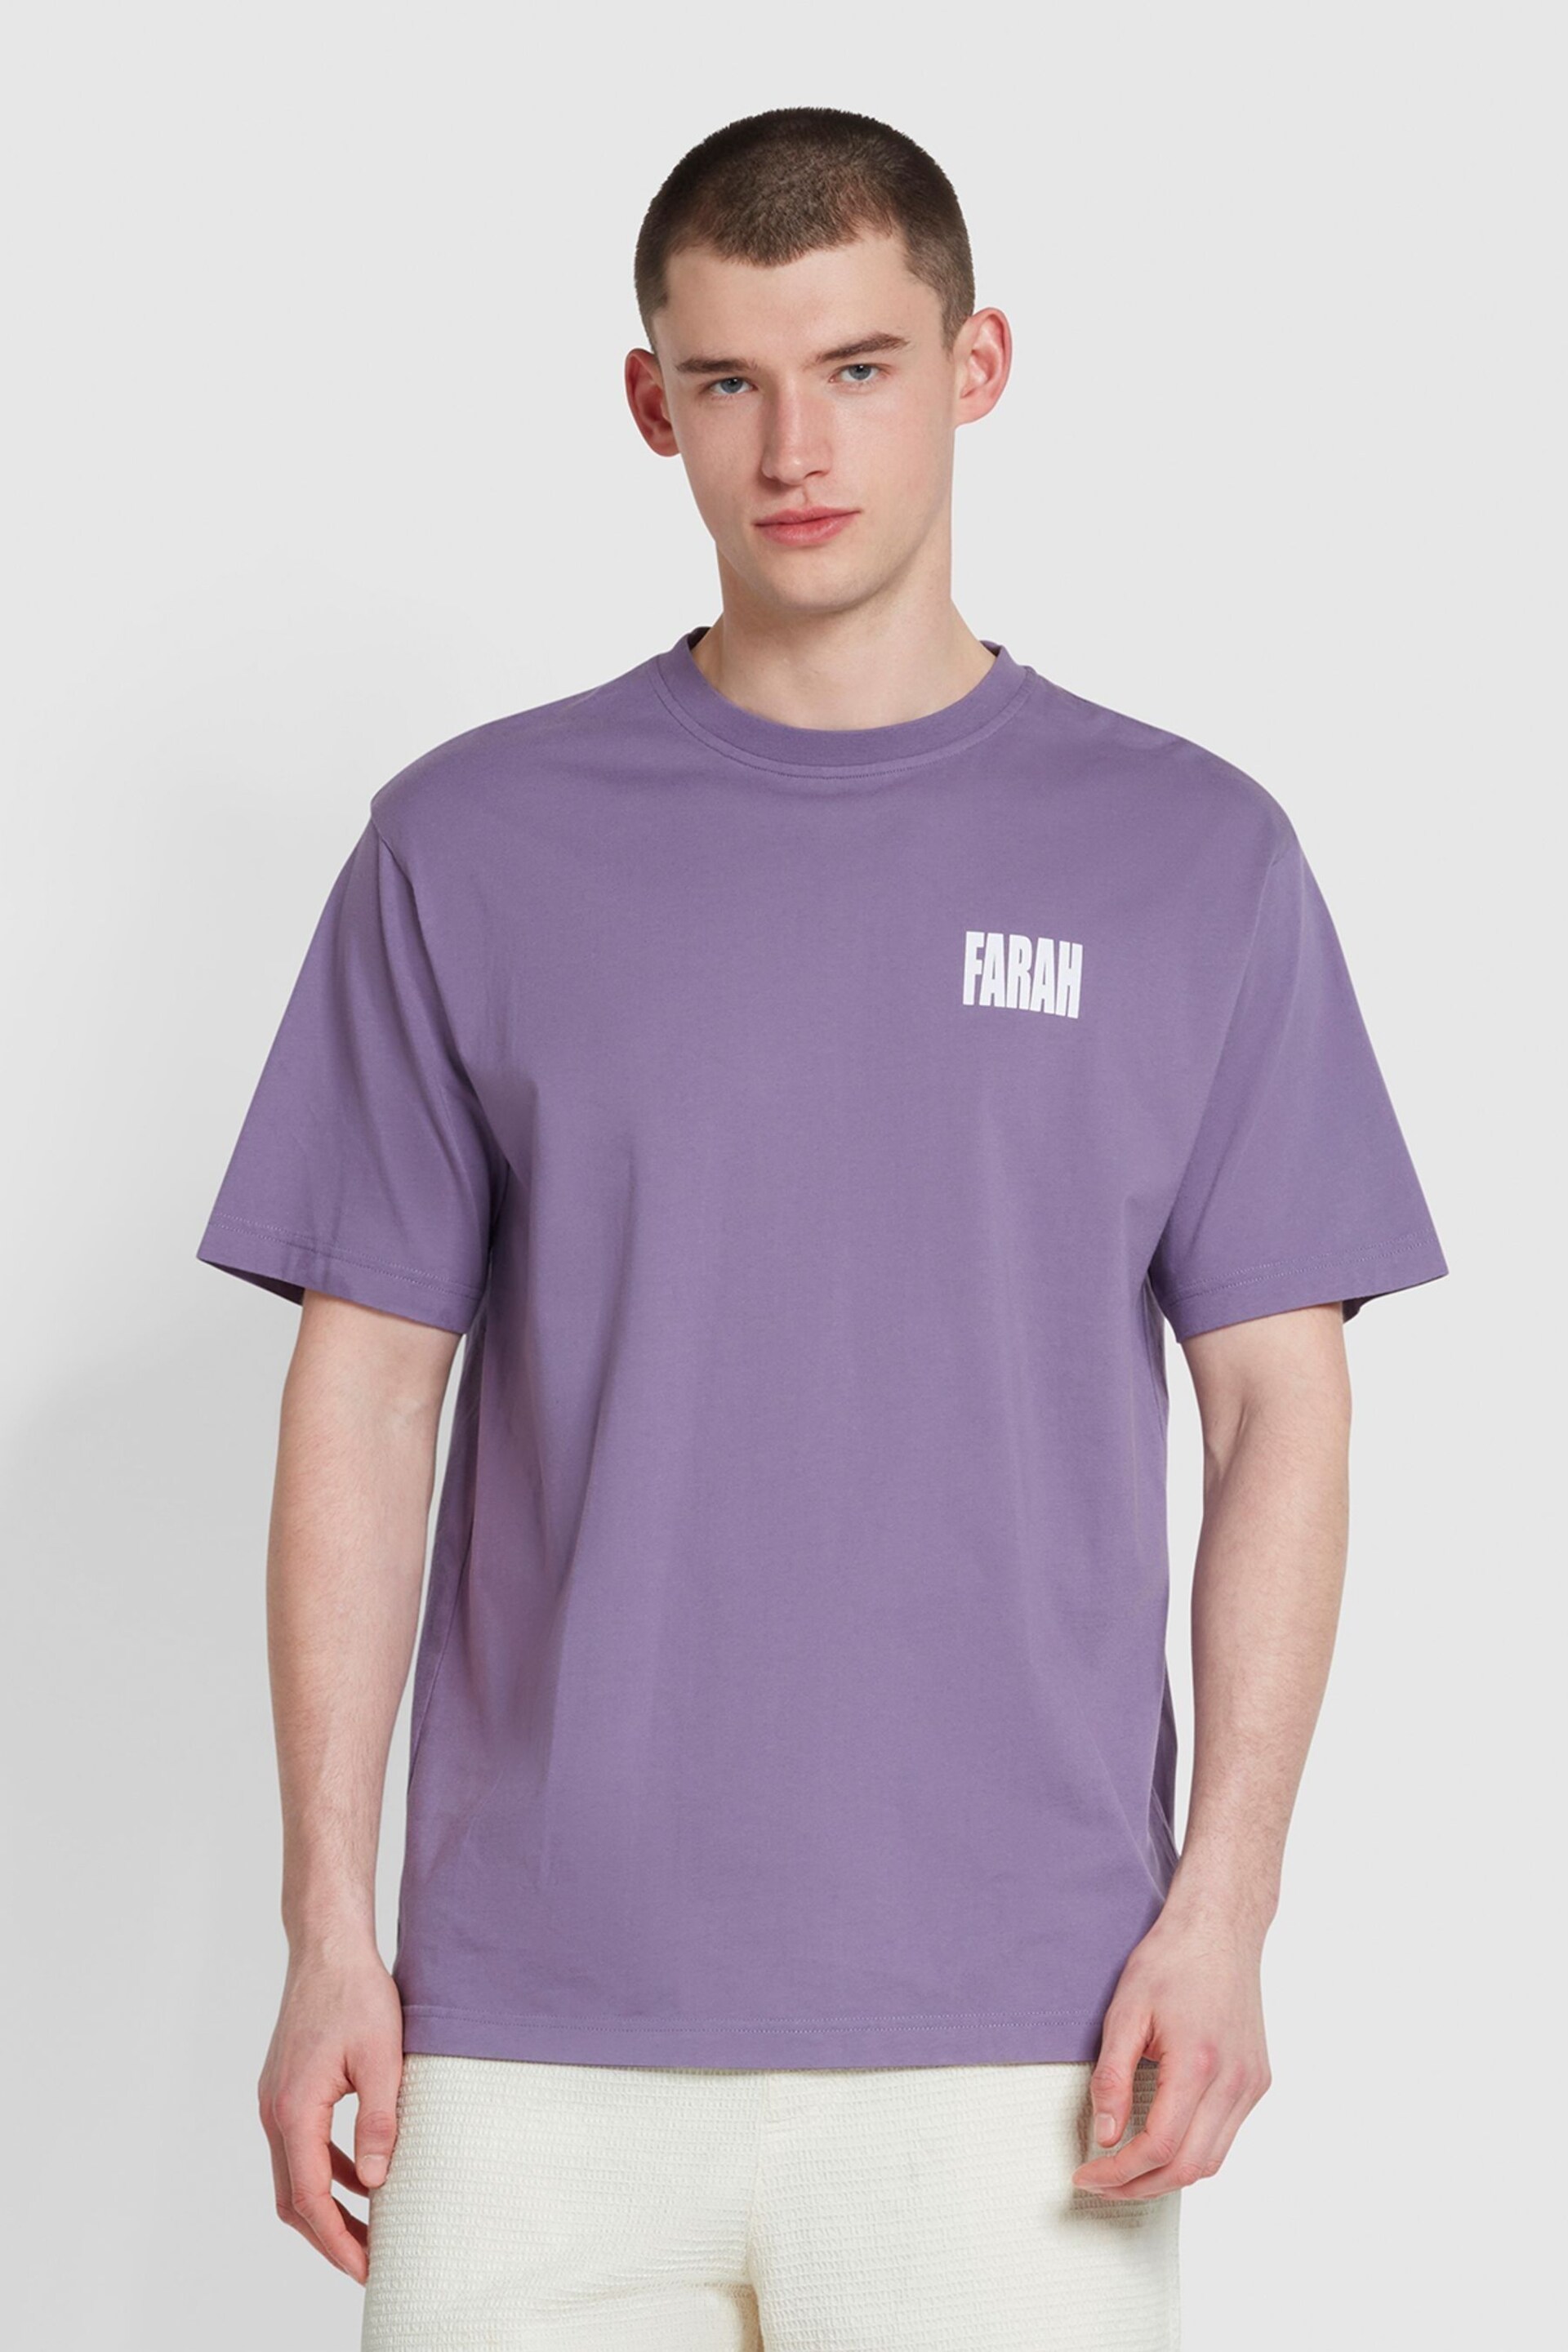 Farah Purple Damon Graphic T-Shirt - Image 1 of 4